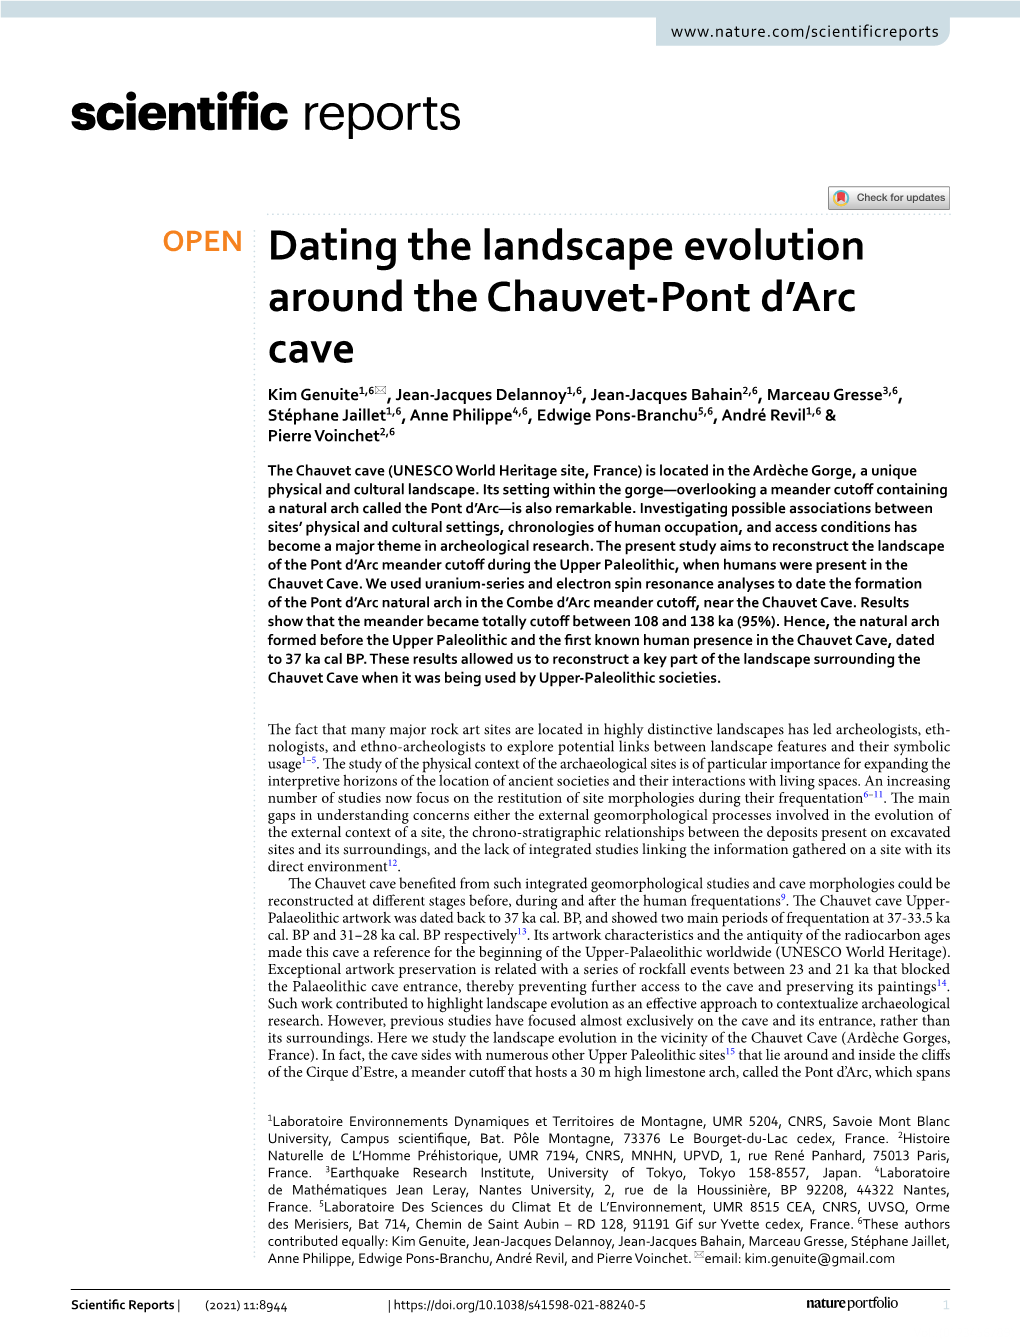 Dating the Landscape Evolution Around the Chauvet-Pont D'arc Cave